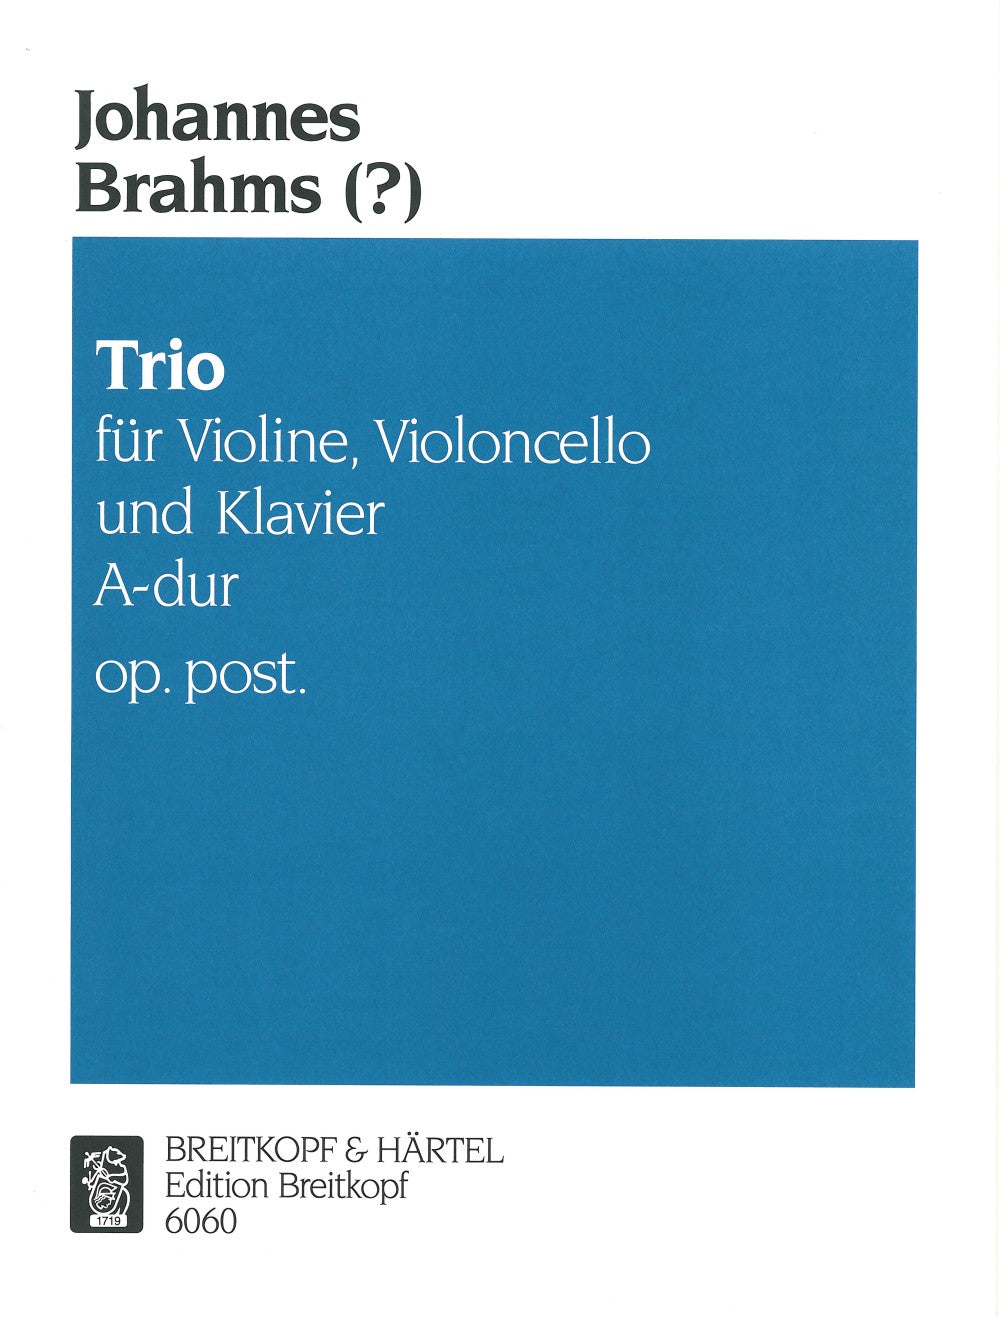 Brahms: Piano Trio in A Major, Op. posth.